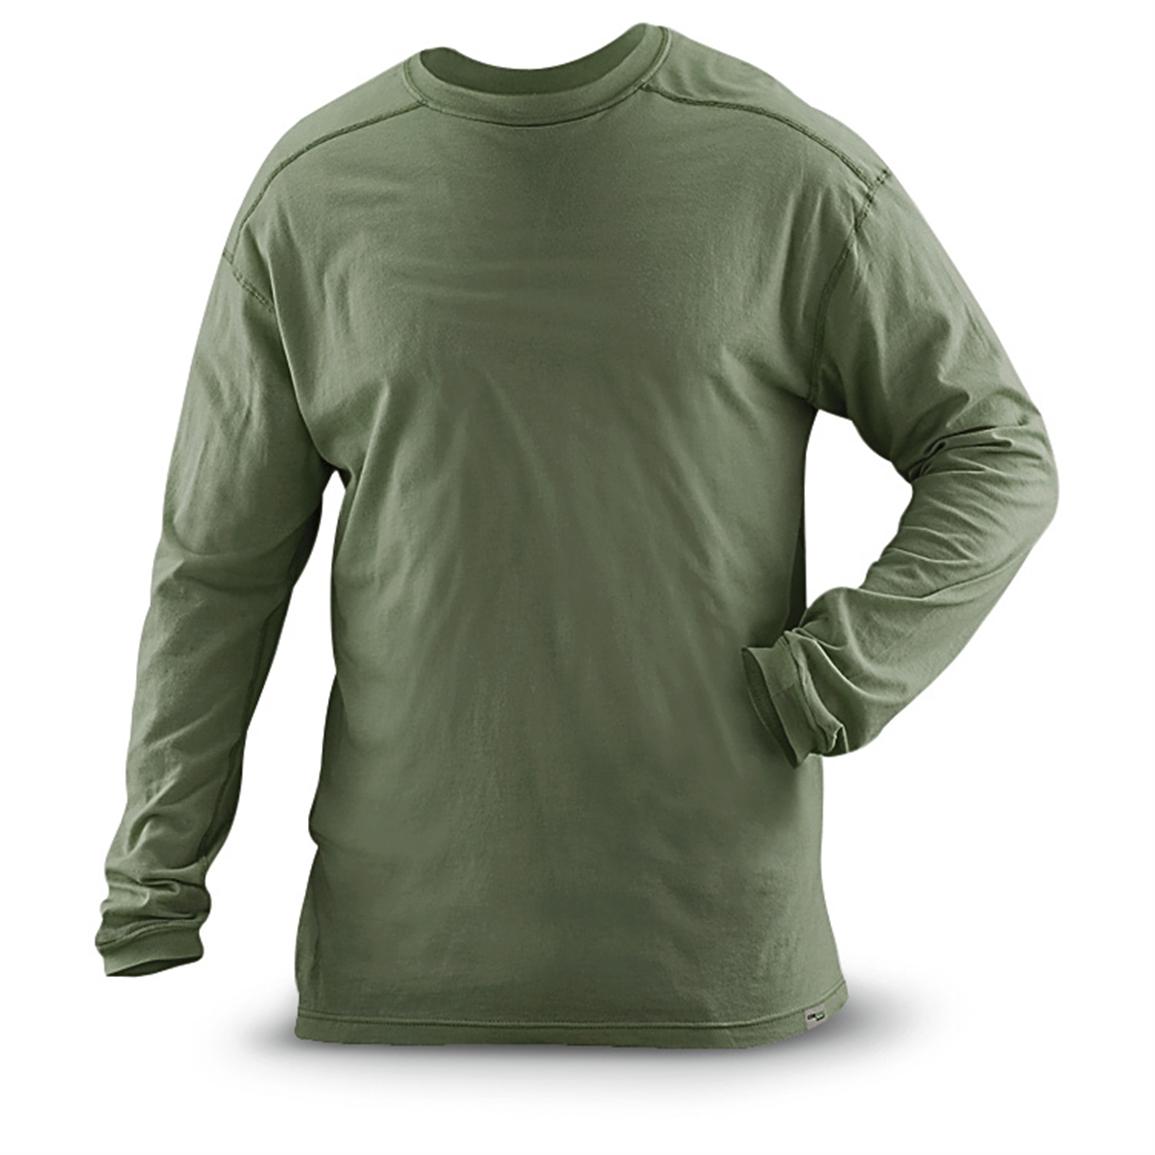 2 TRU - SPEC® CORDURA® Baselayer T - shirts - 232184, Shirts at